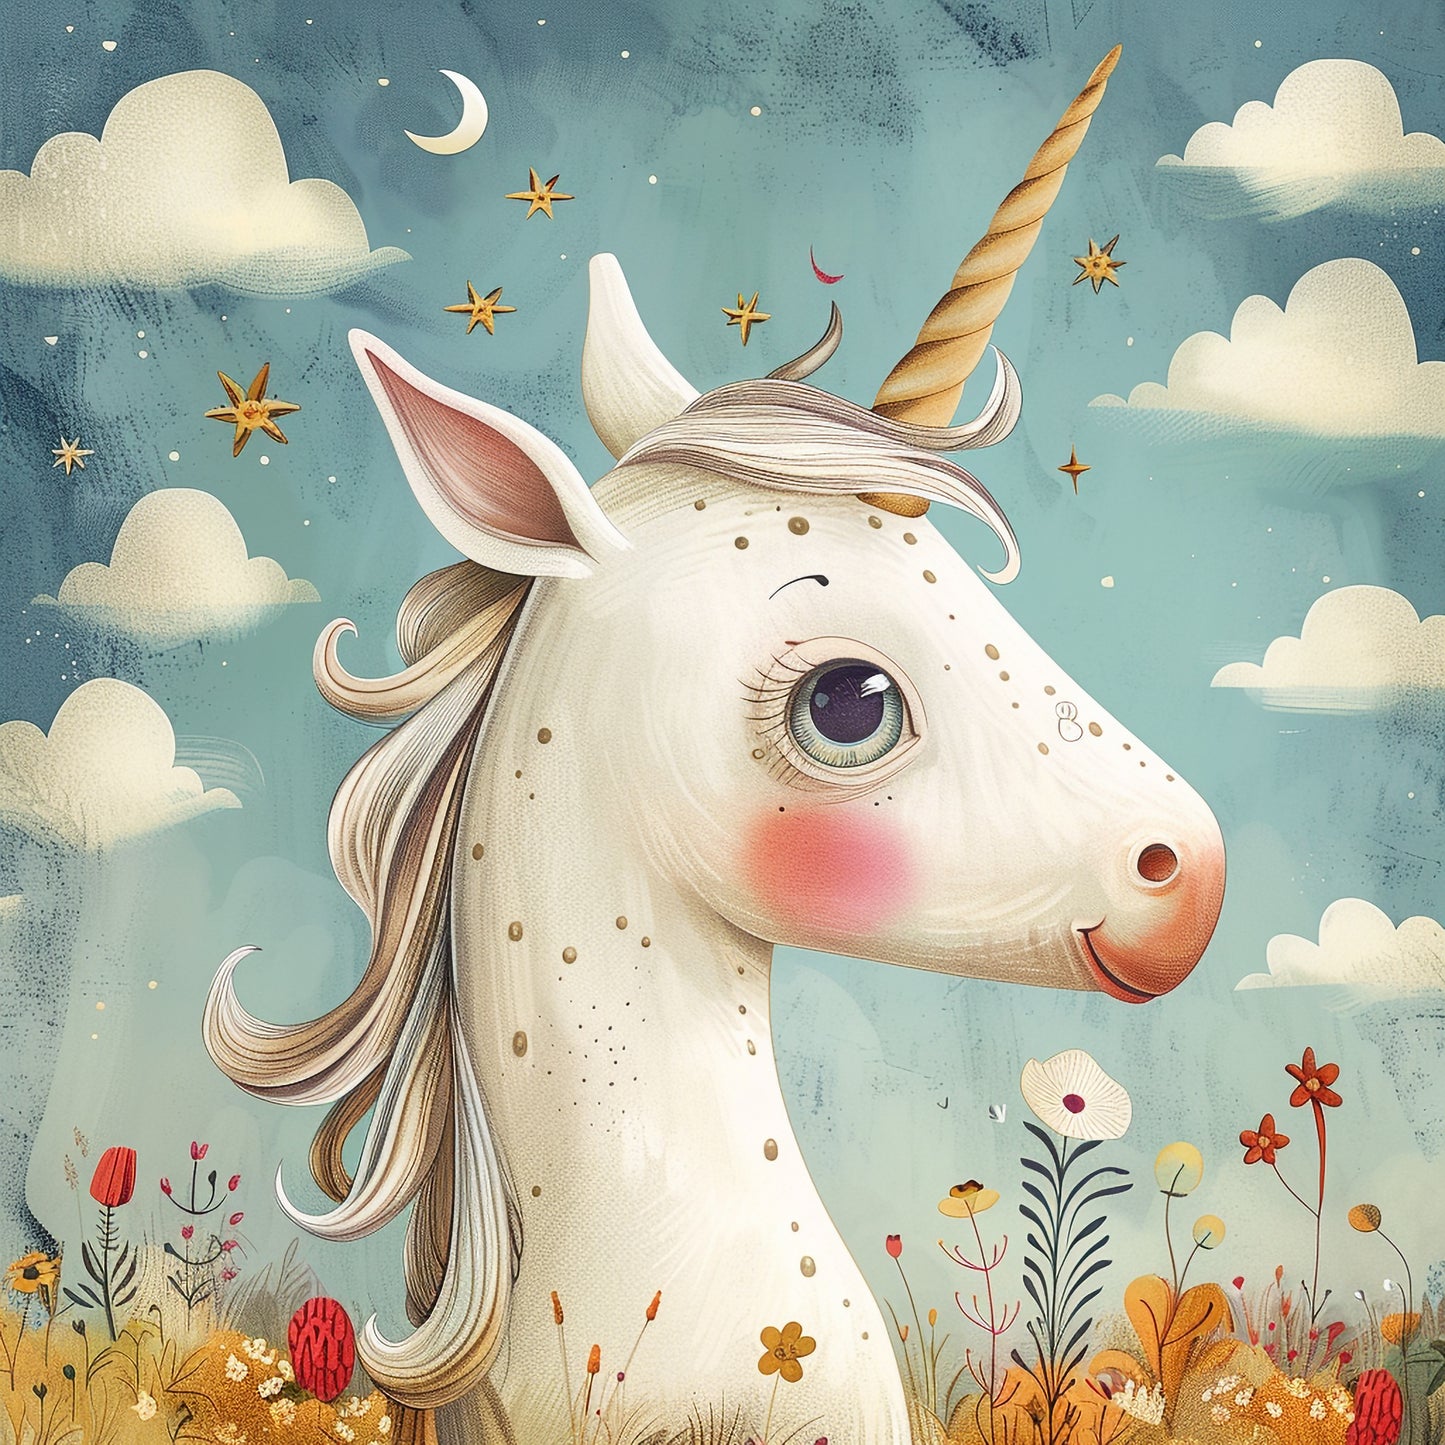 Charming Unicorn in a Magical Dreamy Landscape